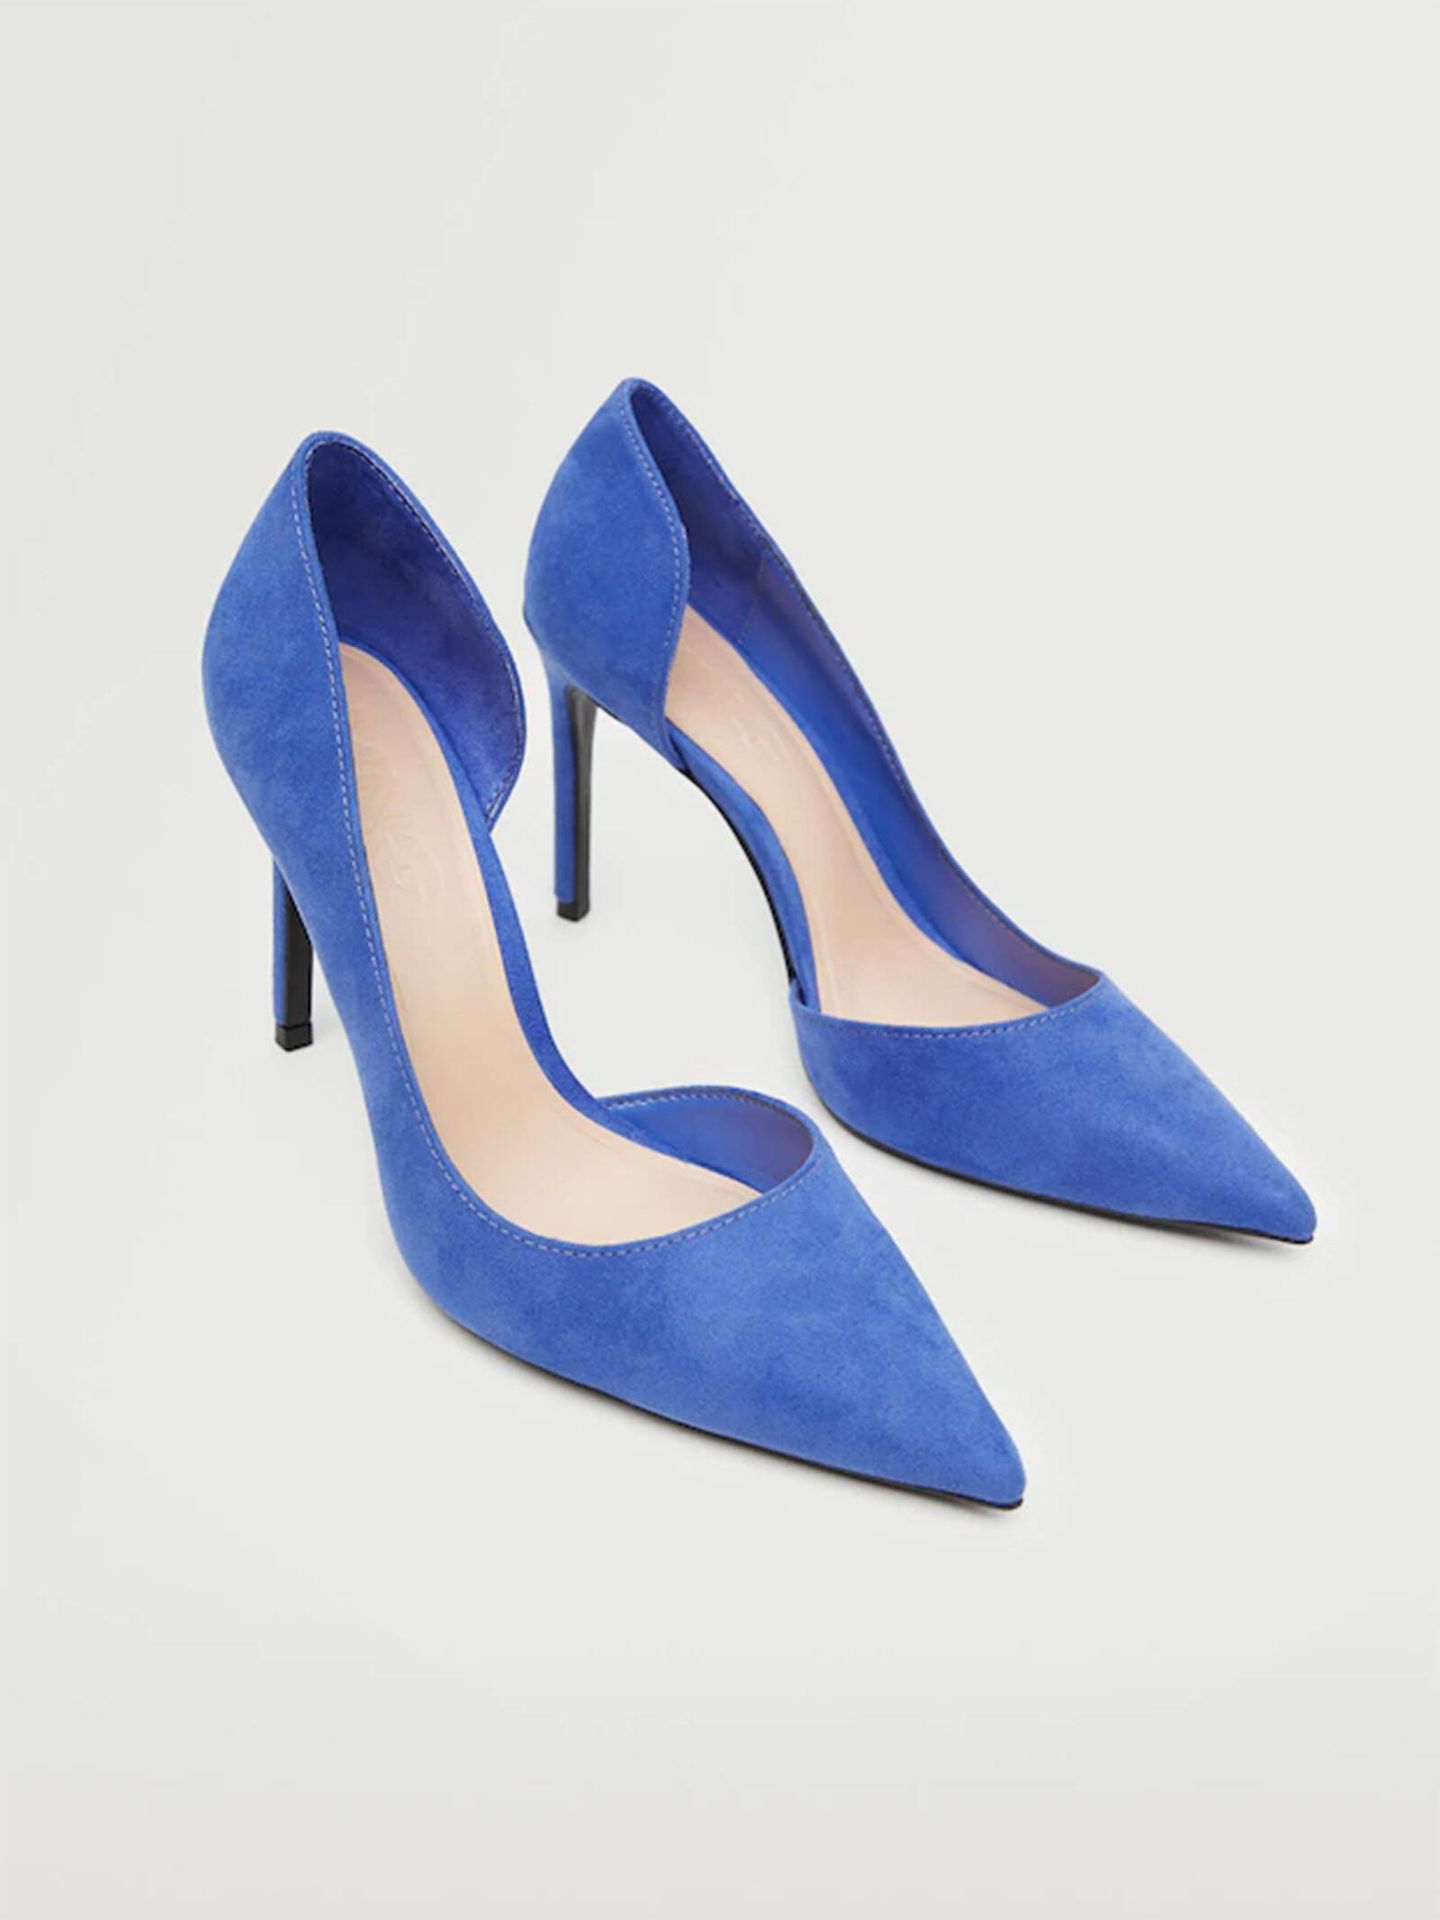 Zapatos azules para un look sofisticado de Mango. (Cortesía)